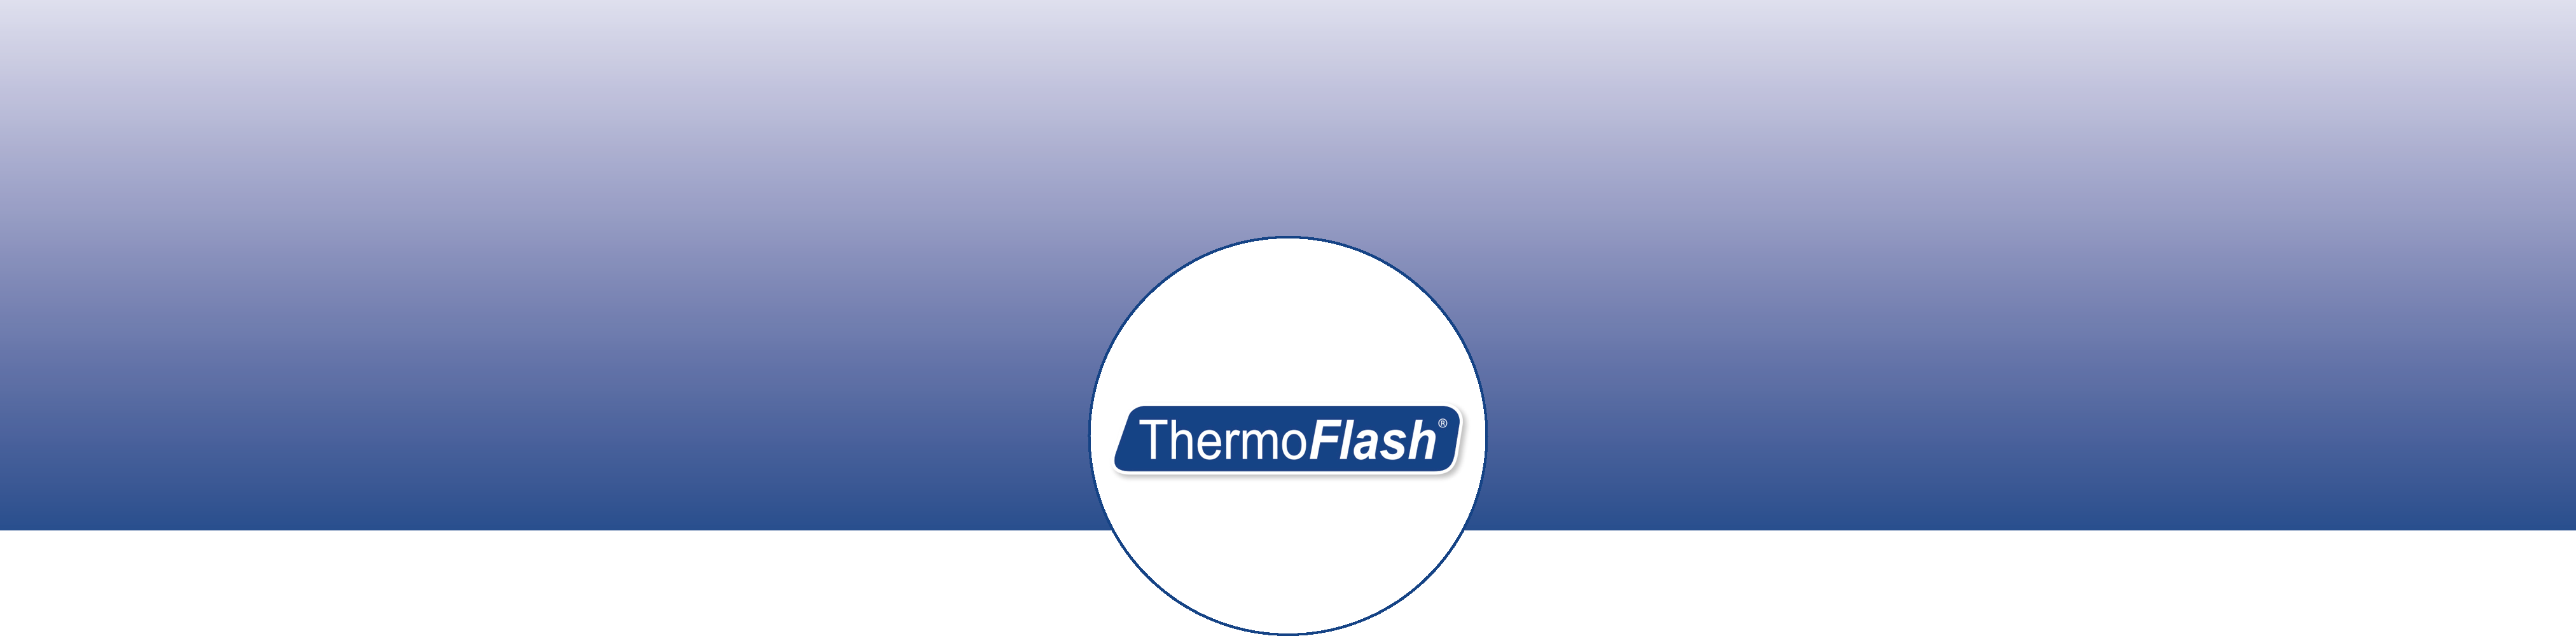 banner_thermoflash